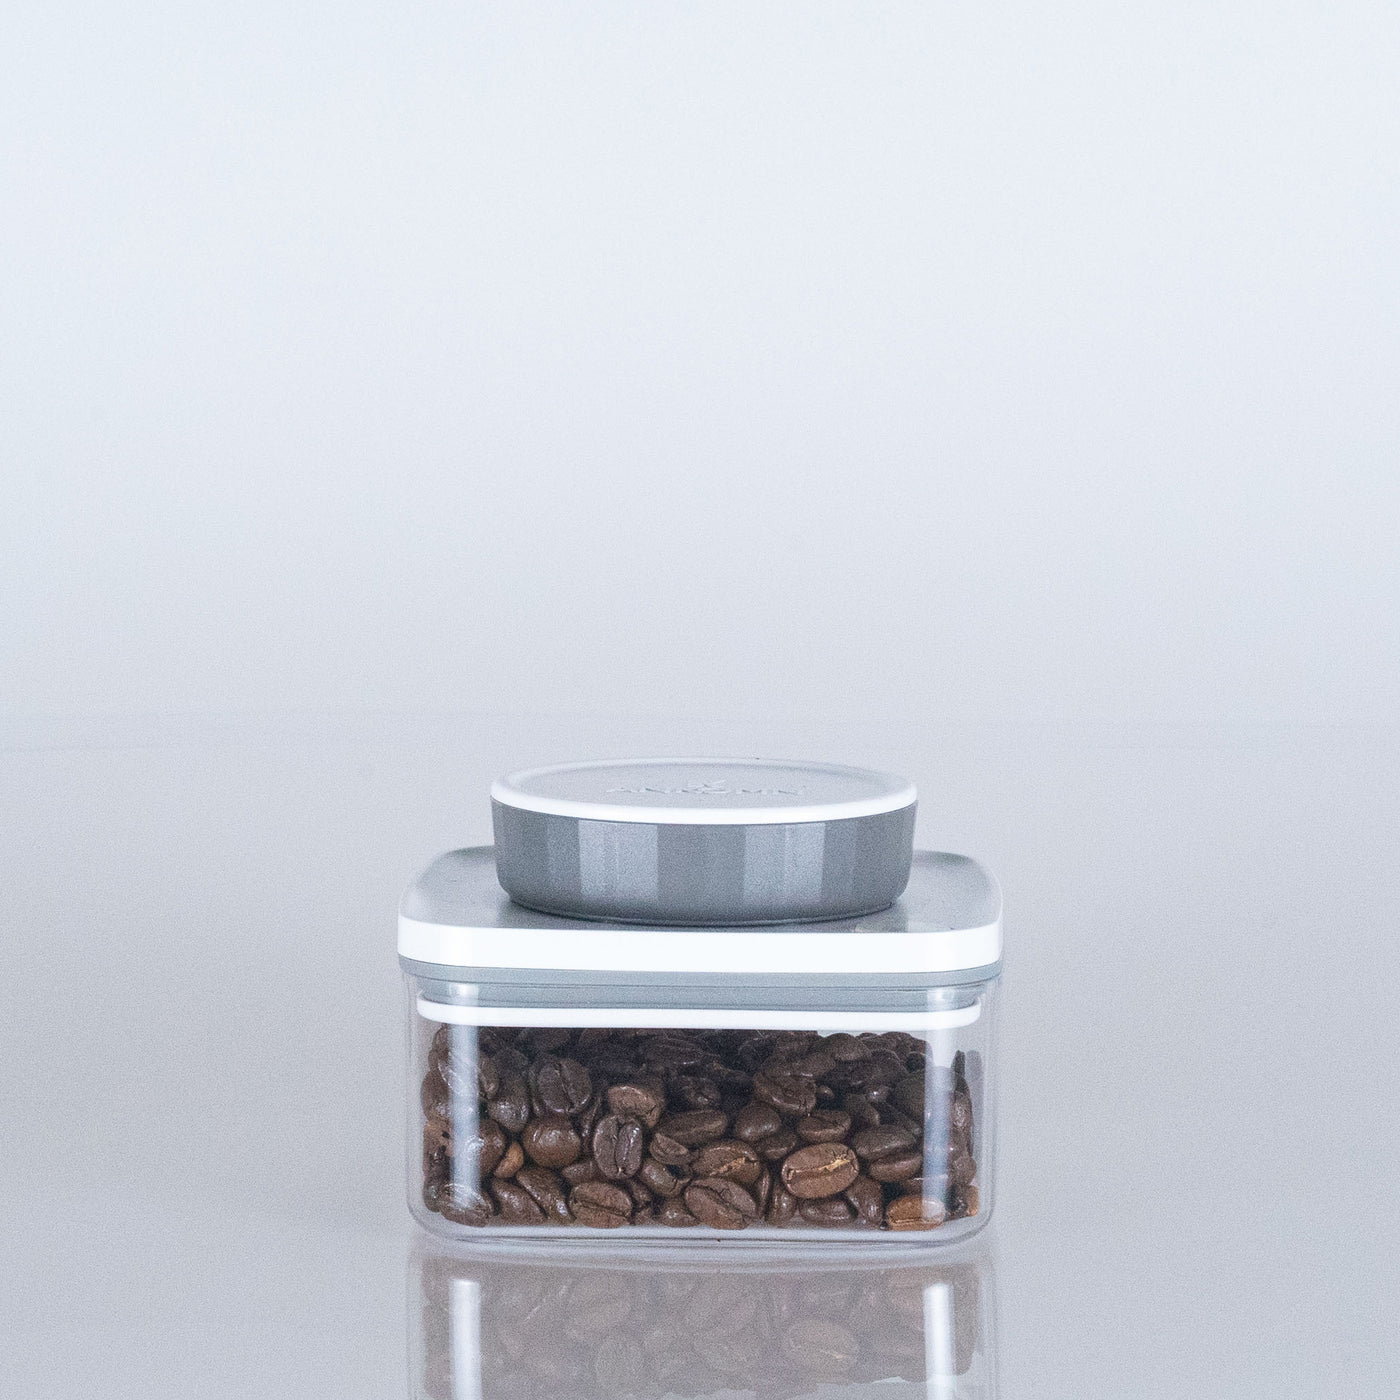 3.5oz/100g Coffee Bean - Turn-N-Seal vacuum storage container 0.3L